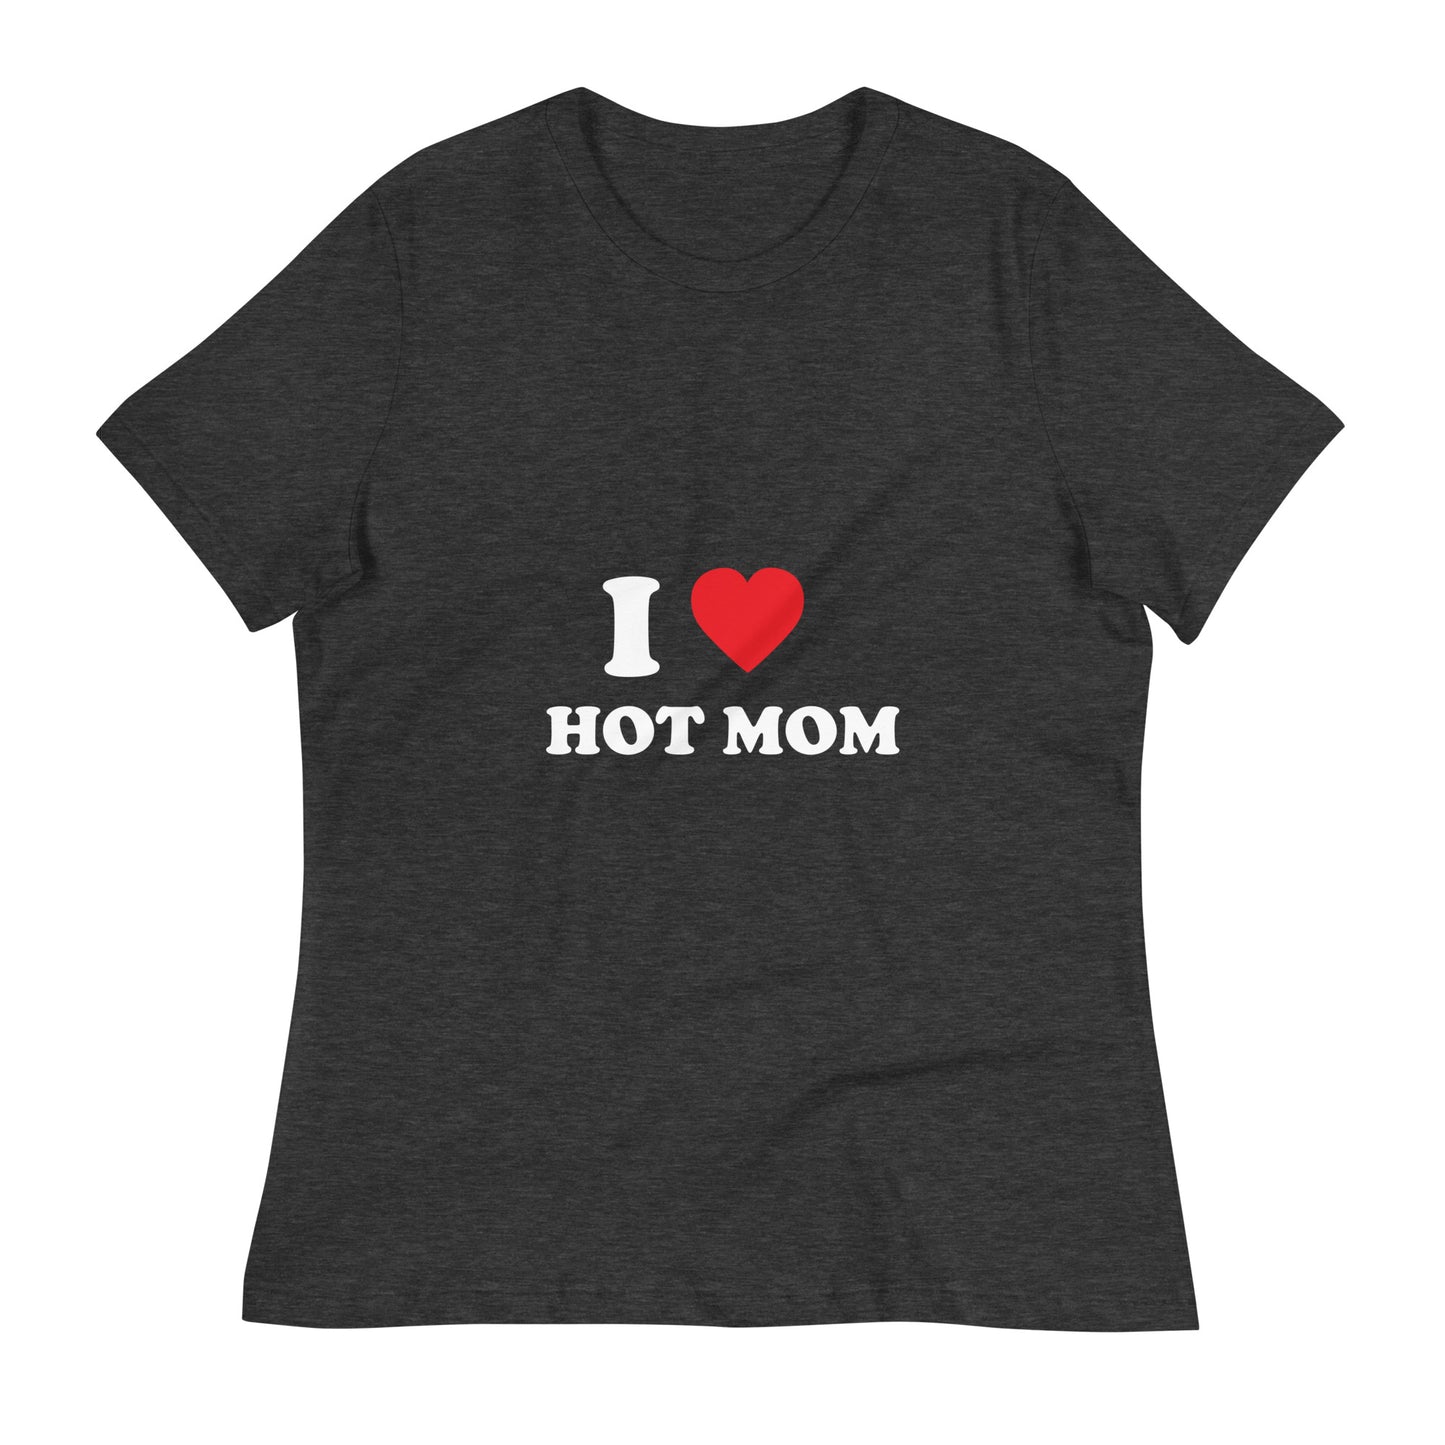 I Love Hot Mom Printed T-Shirt